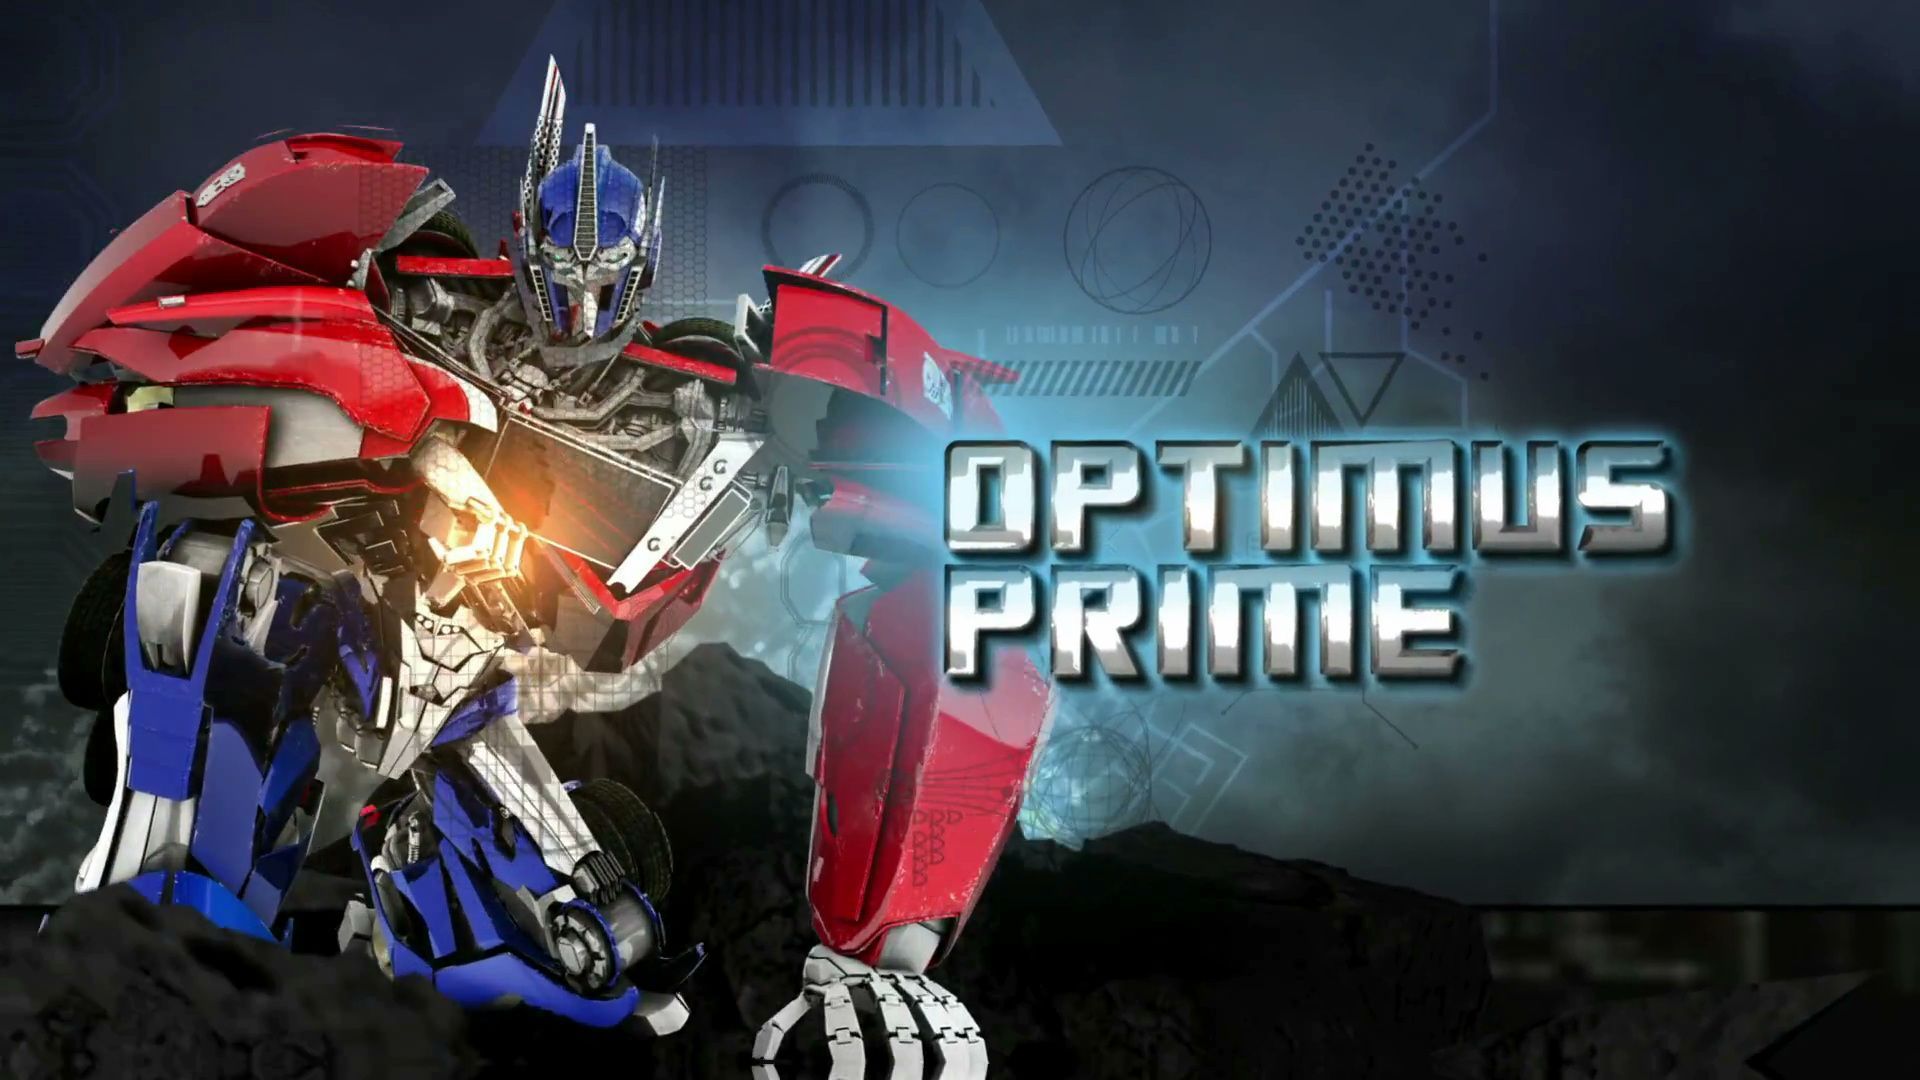 Optimus prime - The Transformers Wallpaper (36948149) - Fanpop